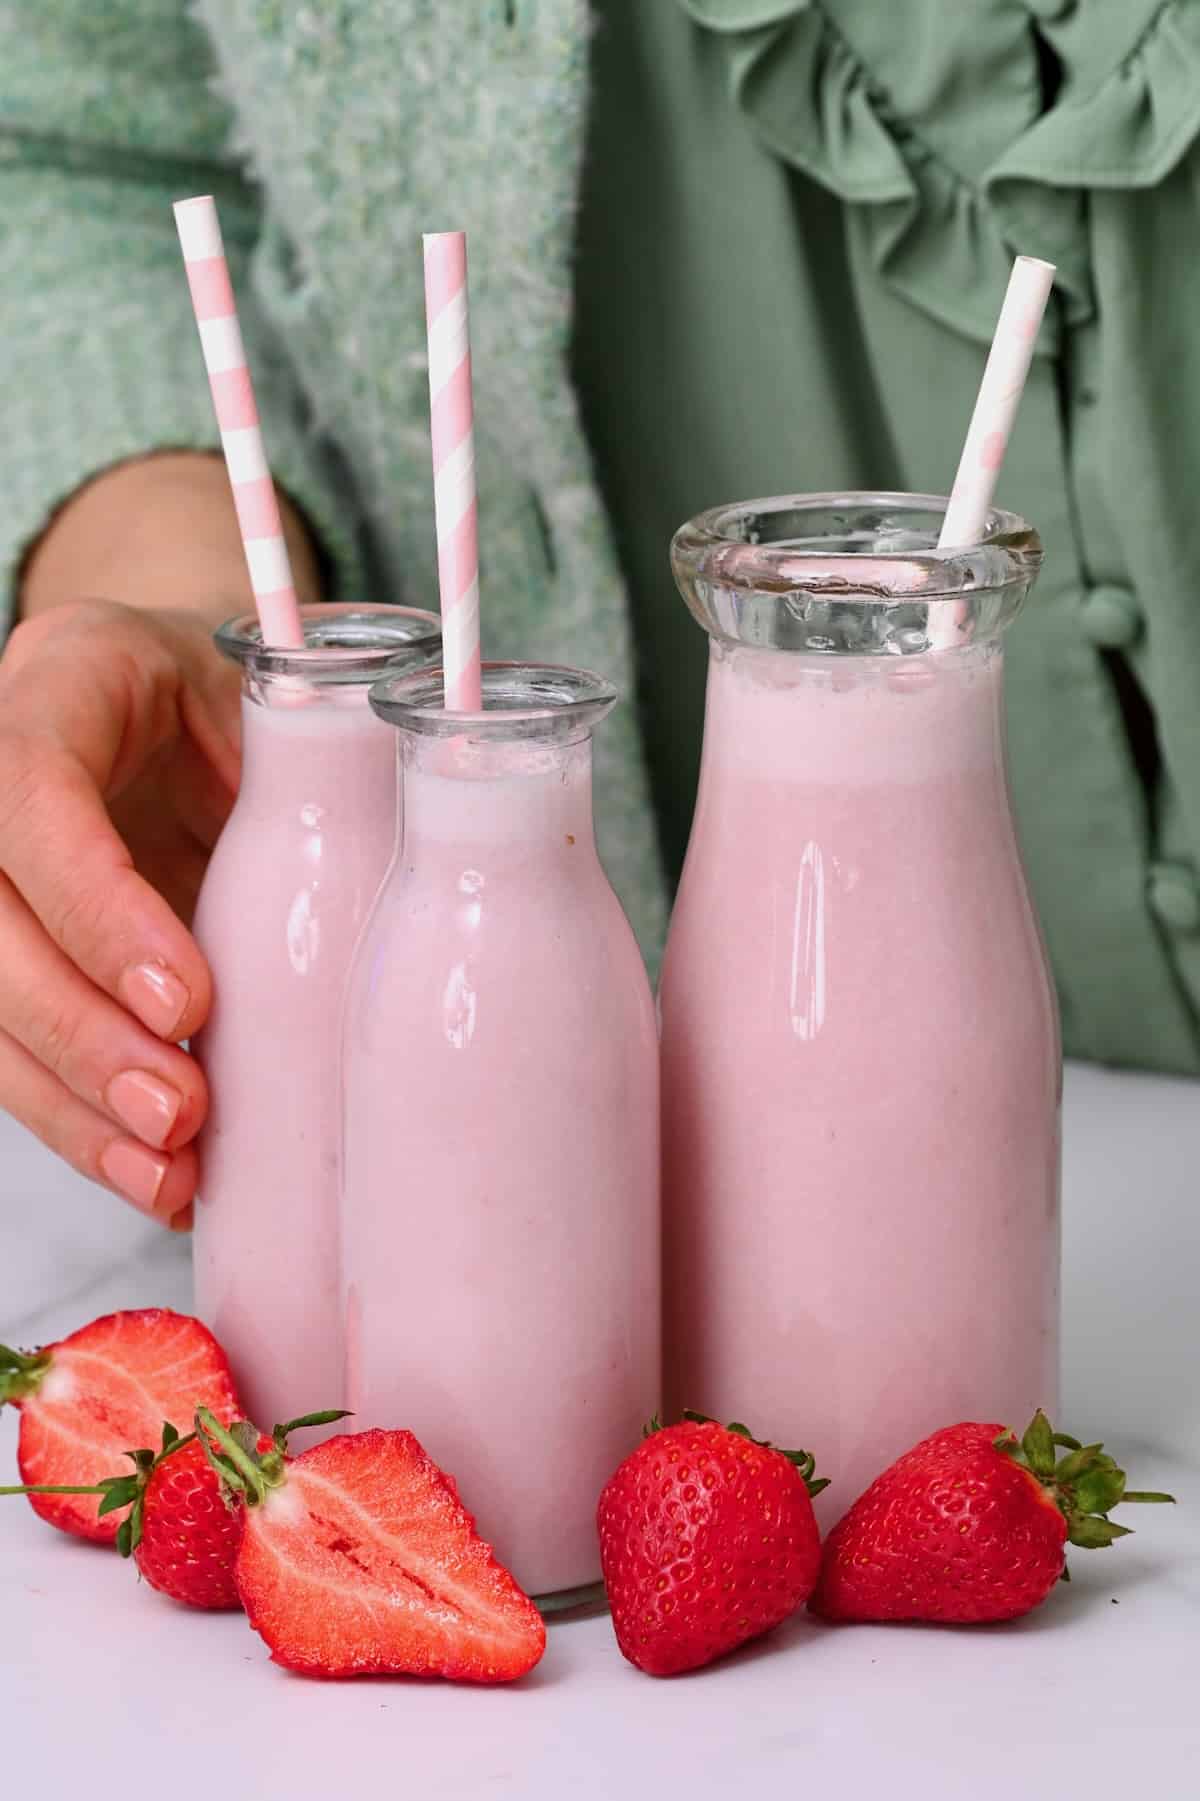 Three bottles with strawberry milk